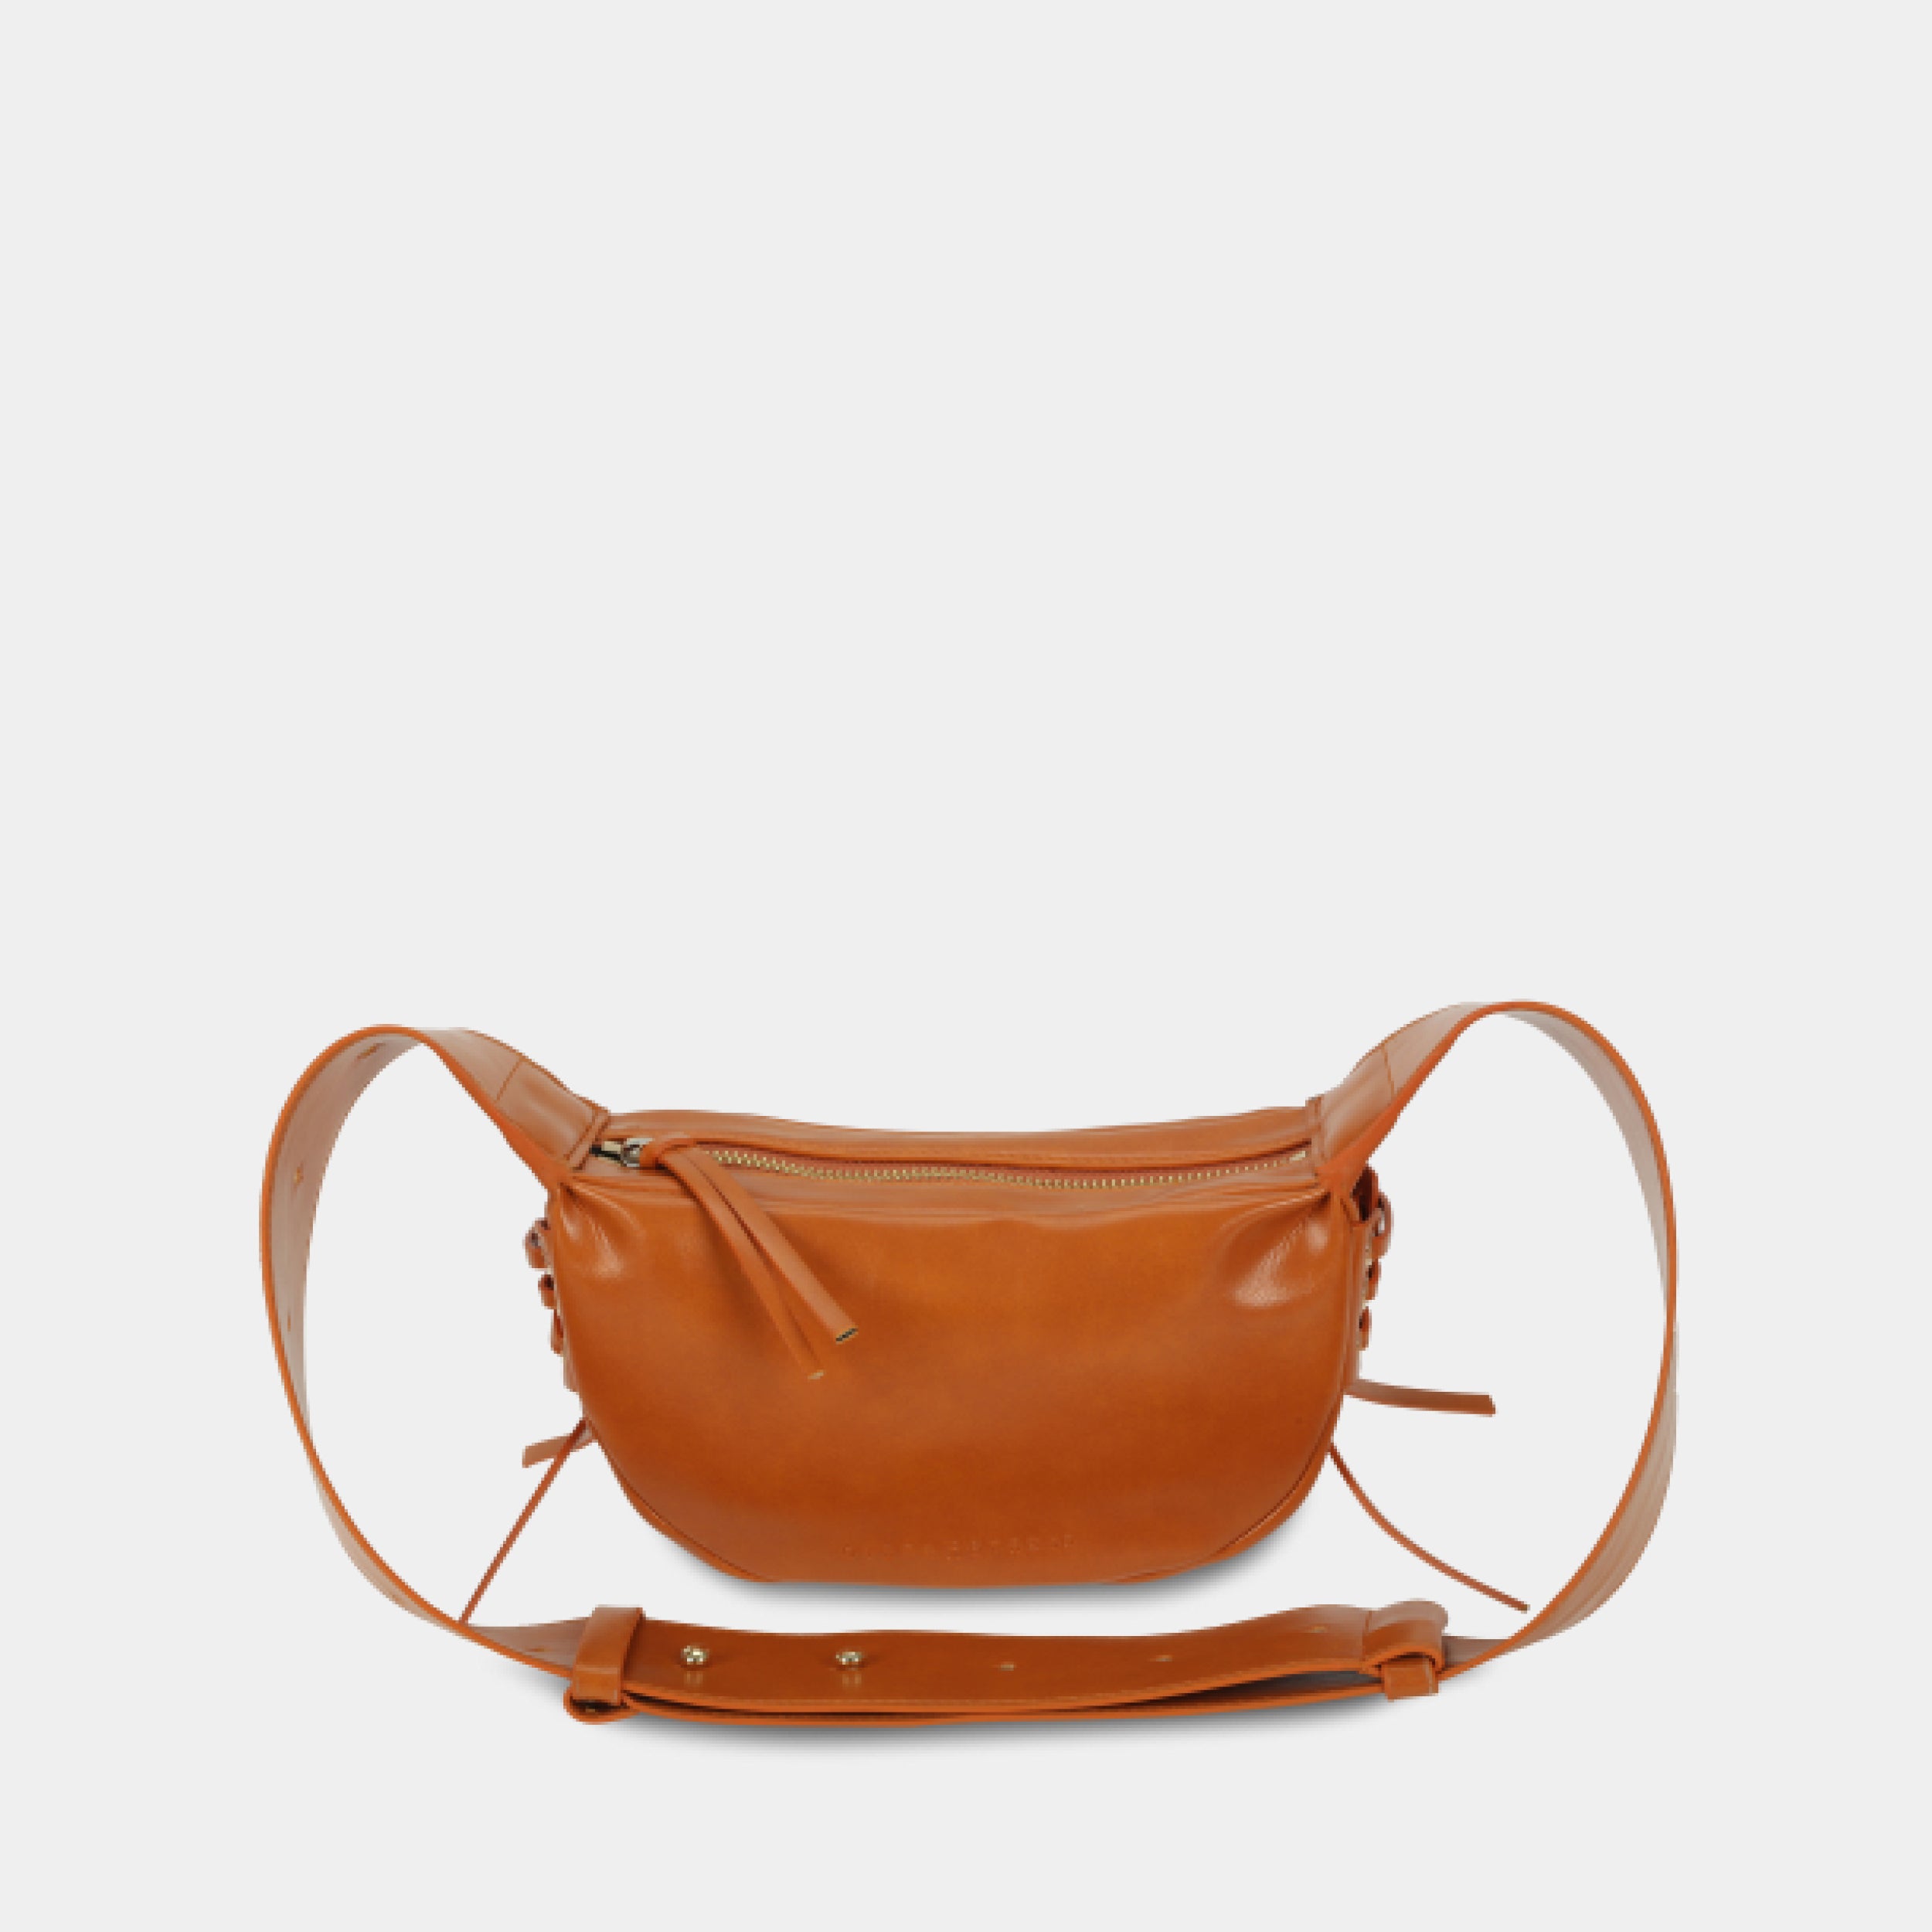 LACE bag small size (S) orange color